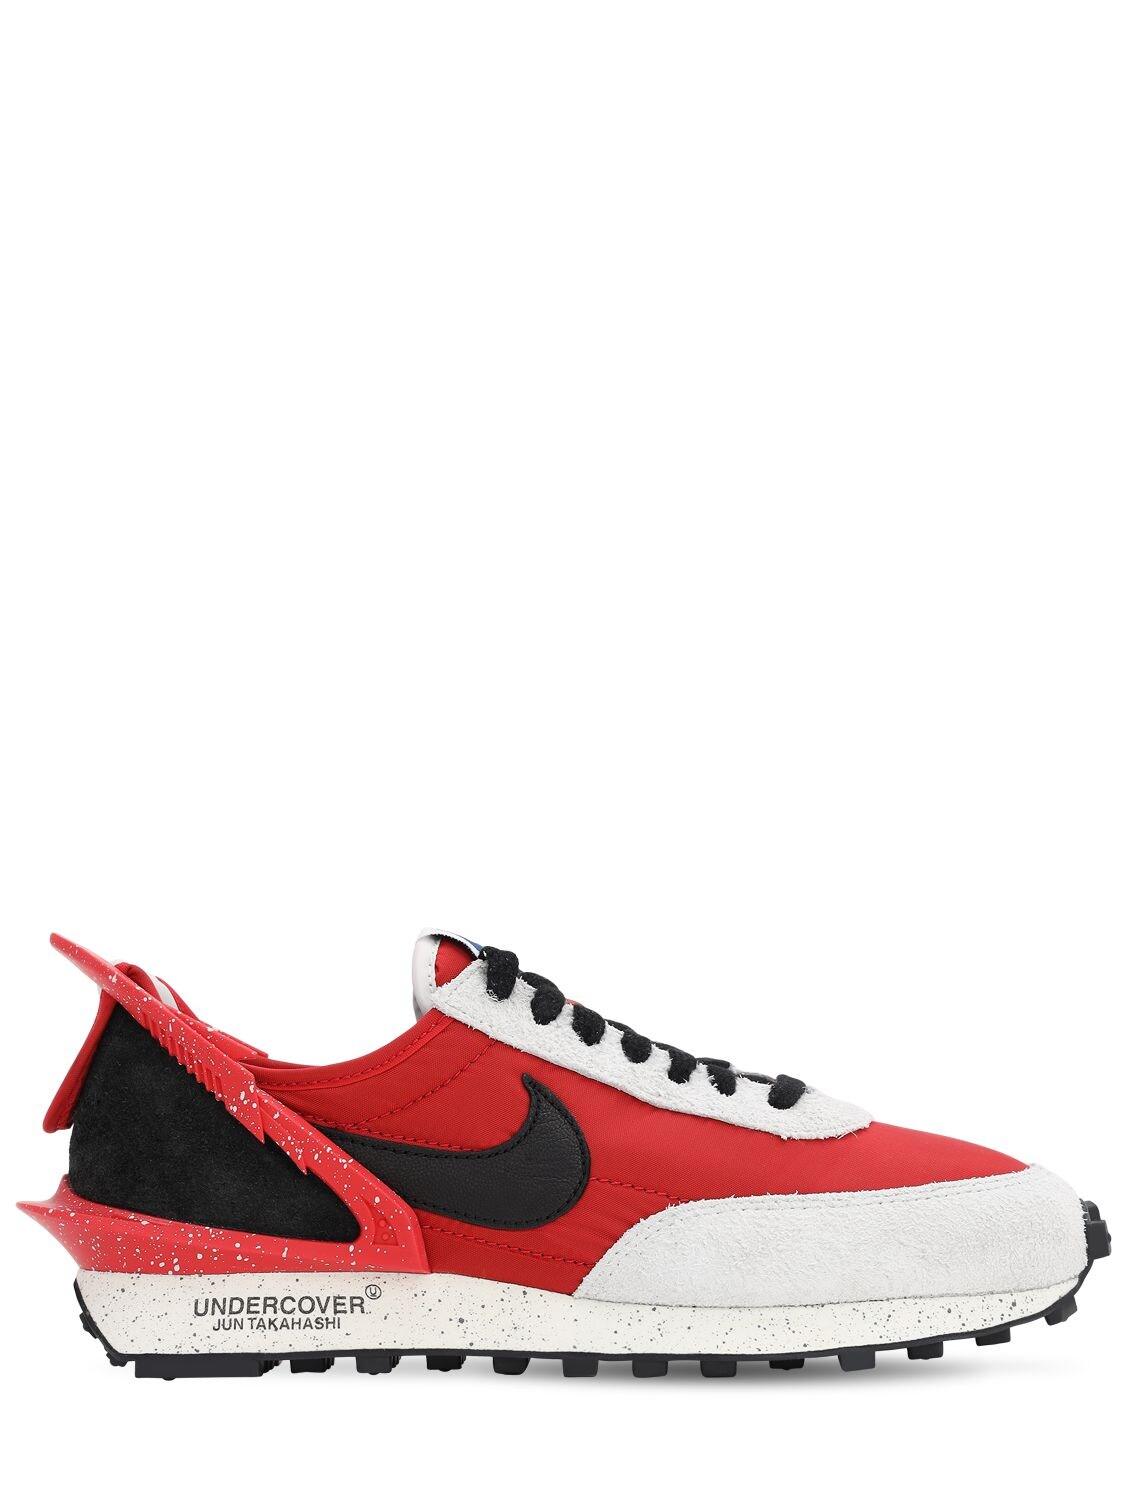 Nike Daybreak / Undercover Sneakers In Red,black